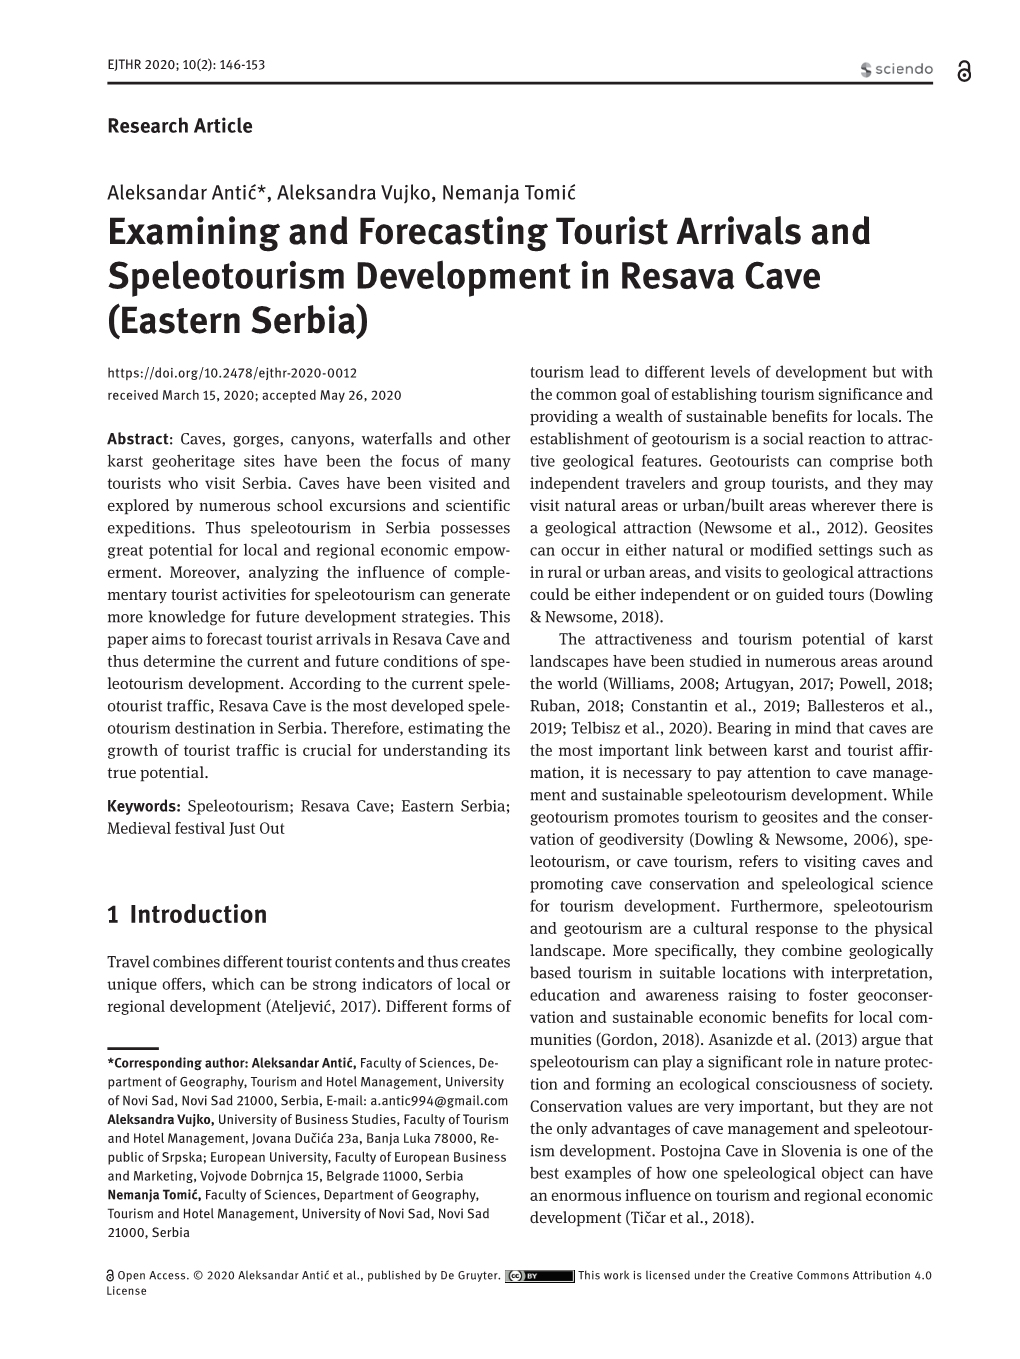 Examining and Forecasting Tourist Arrivals and Speleotourism